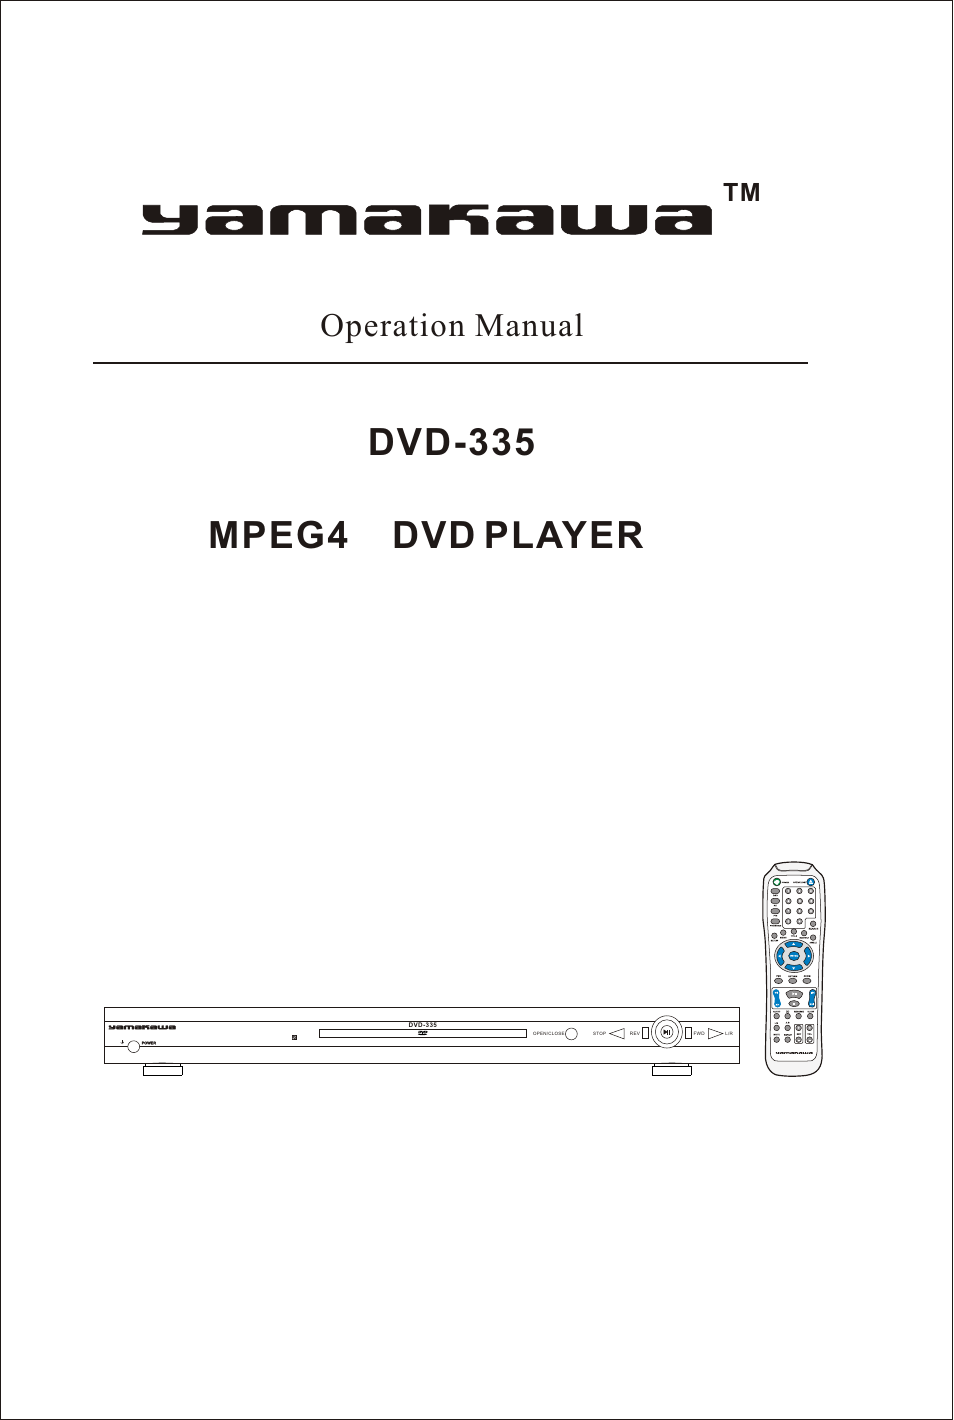 DVD-335